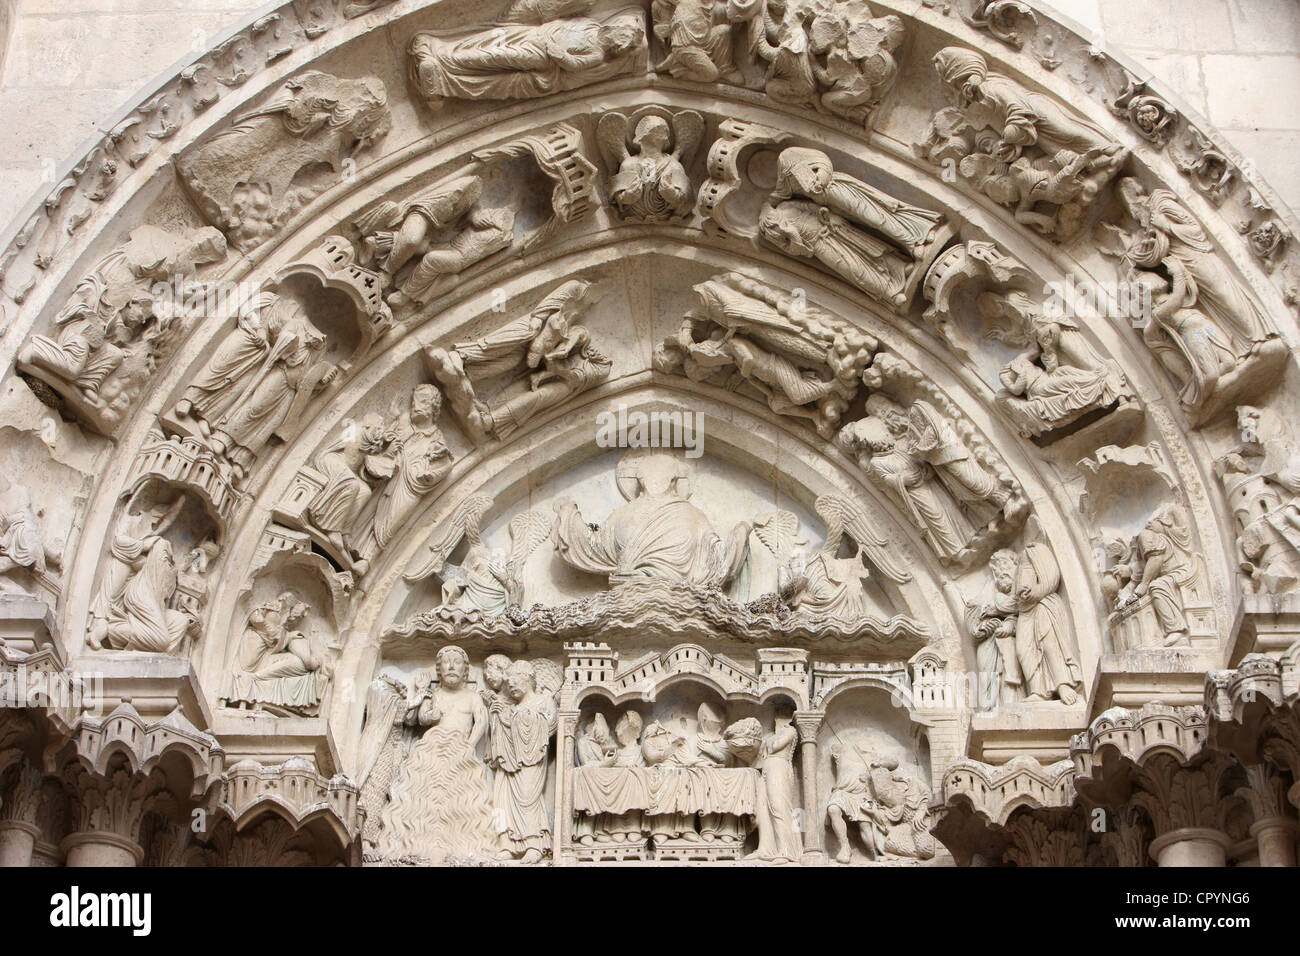 St. John the Baptist's gate tympanum, St. Stephen's Cathedral, Sens, Yonne, Burgundy, France, Europe Stock Photo